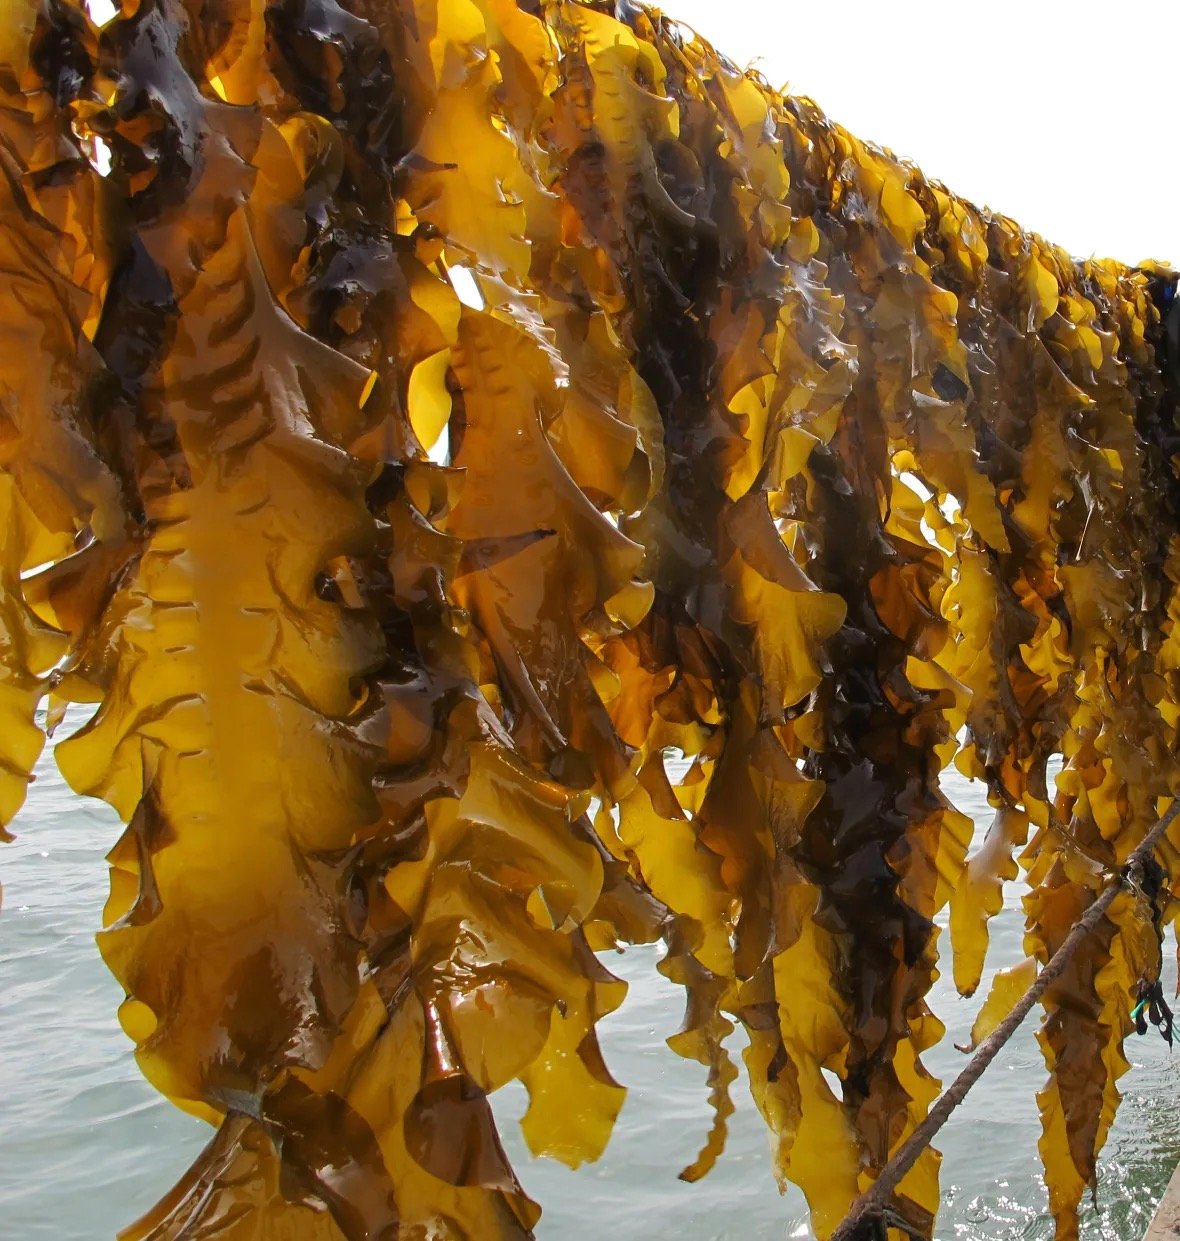 sugar-kelp-close-up.jpeg